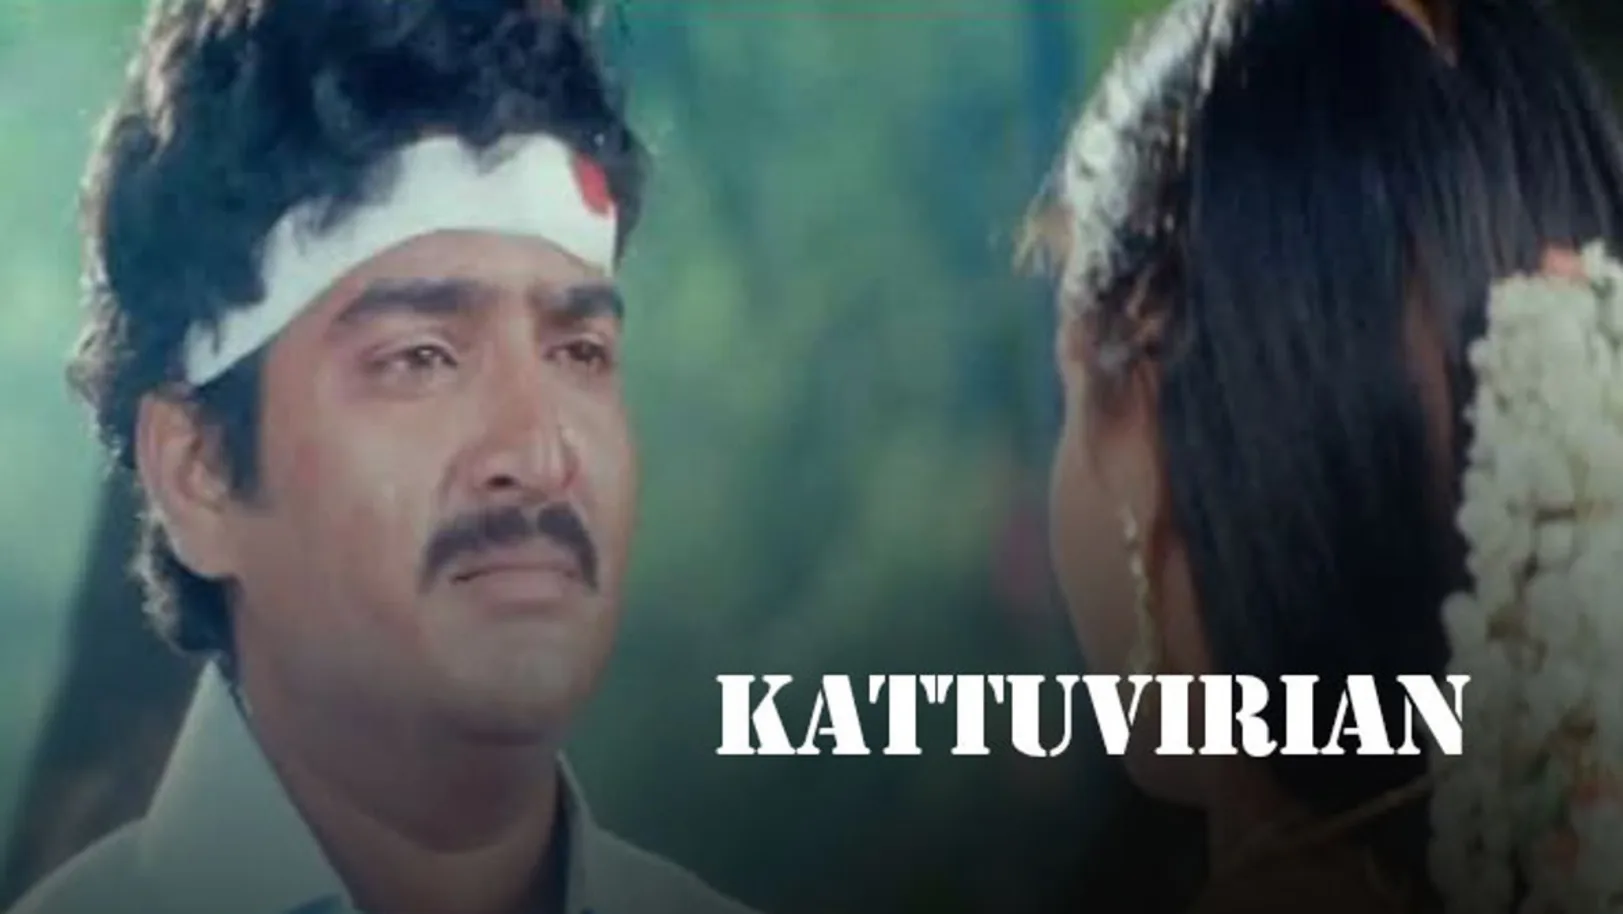 Kattuviriyan Movie